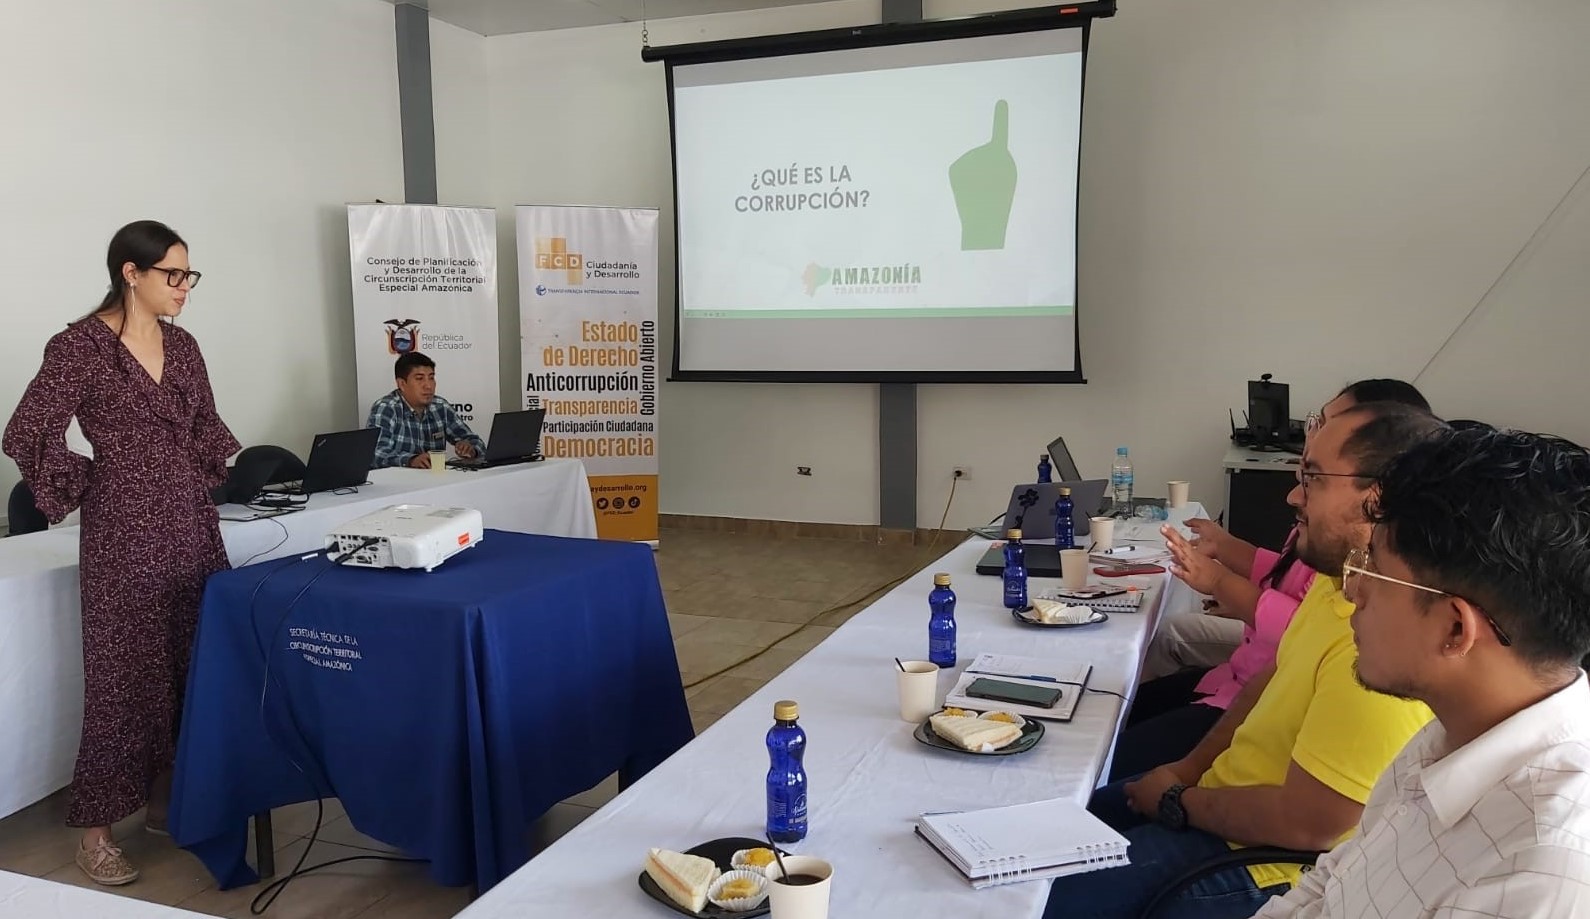 FCD Ecuador gives a presentation on corruption 